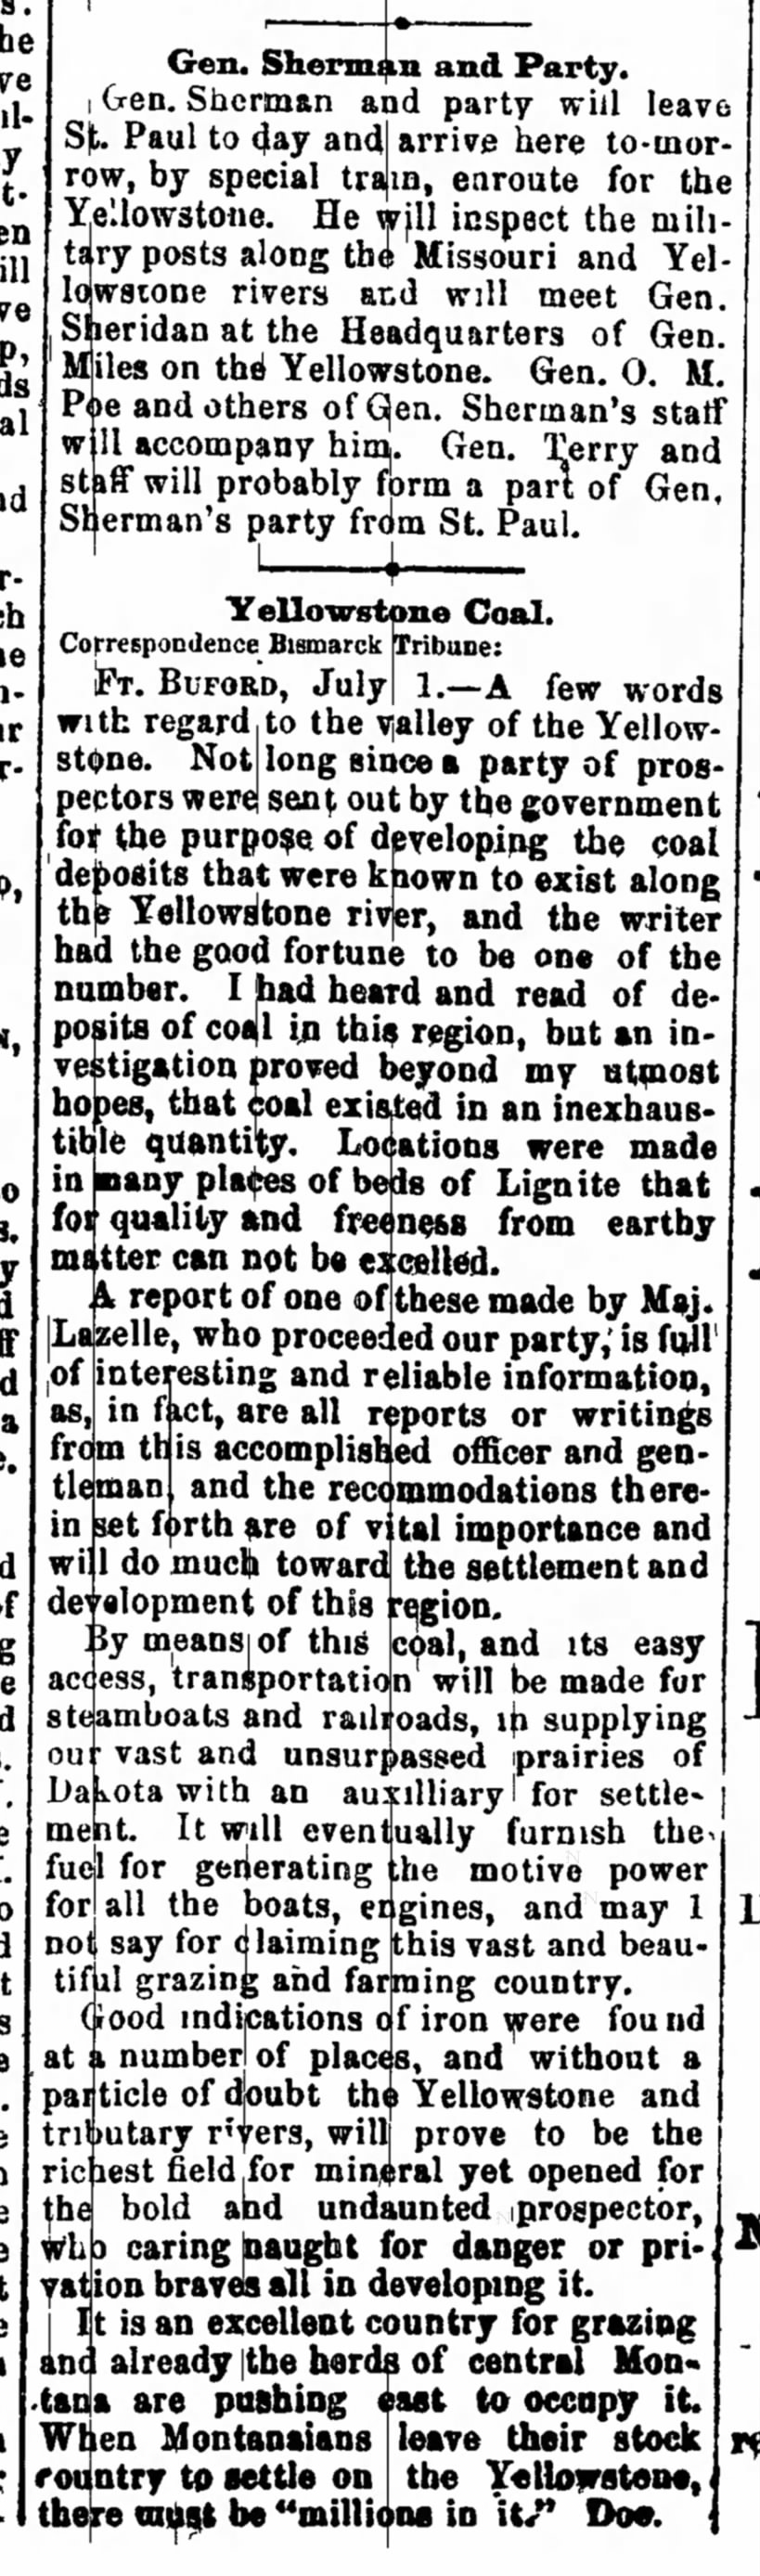 Bismark Tribune, Bismark ND, 6 July 1877